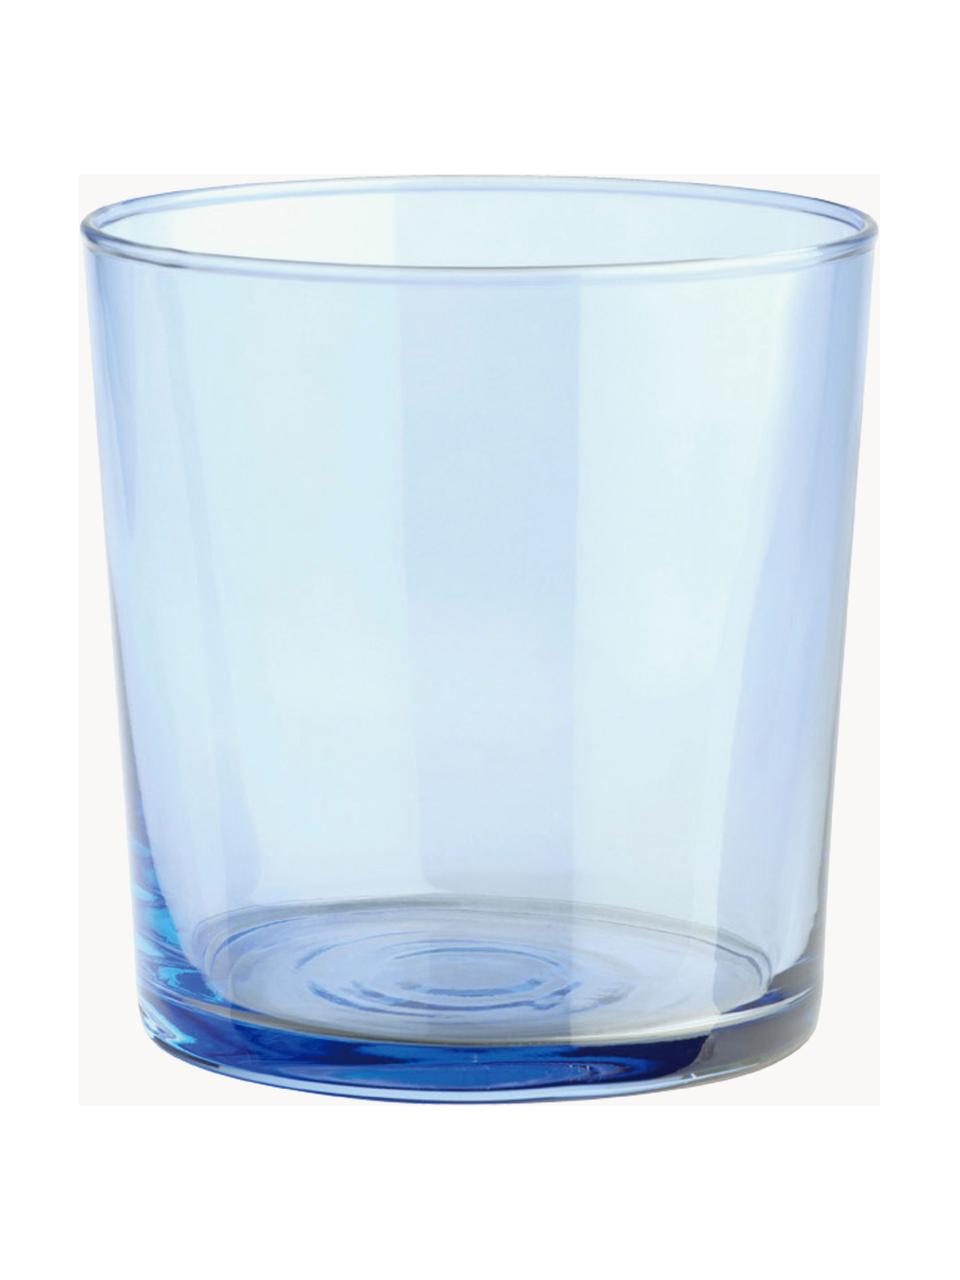 Komplet szklanek Lola, 6 elem., Szkło, Wielobarwny, transparentny, Ø 7 x W 9 cm, 345 ml